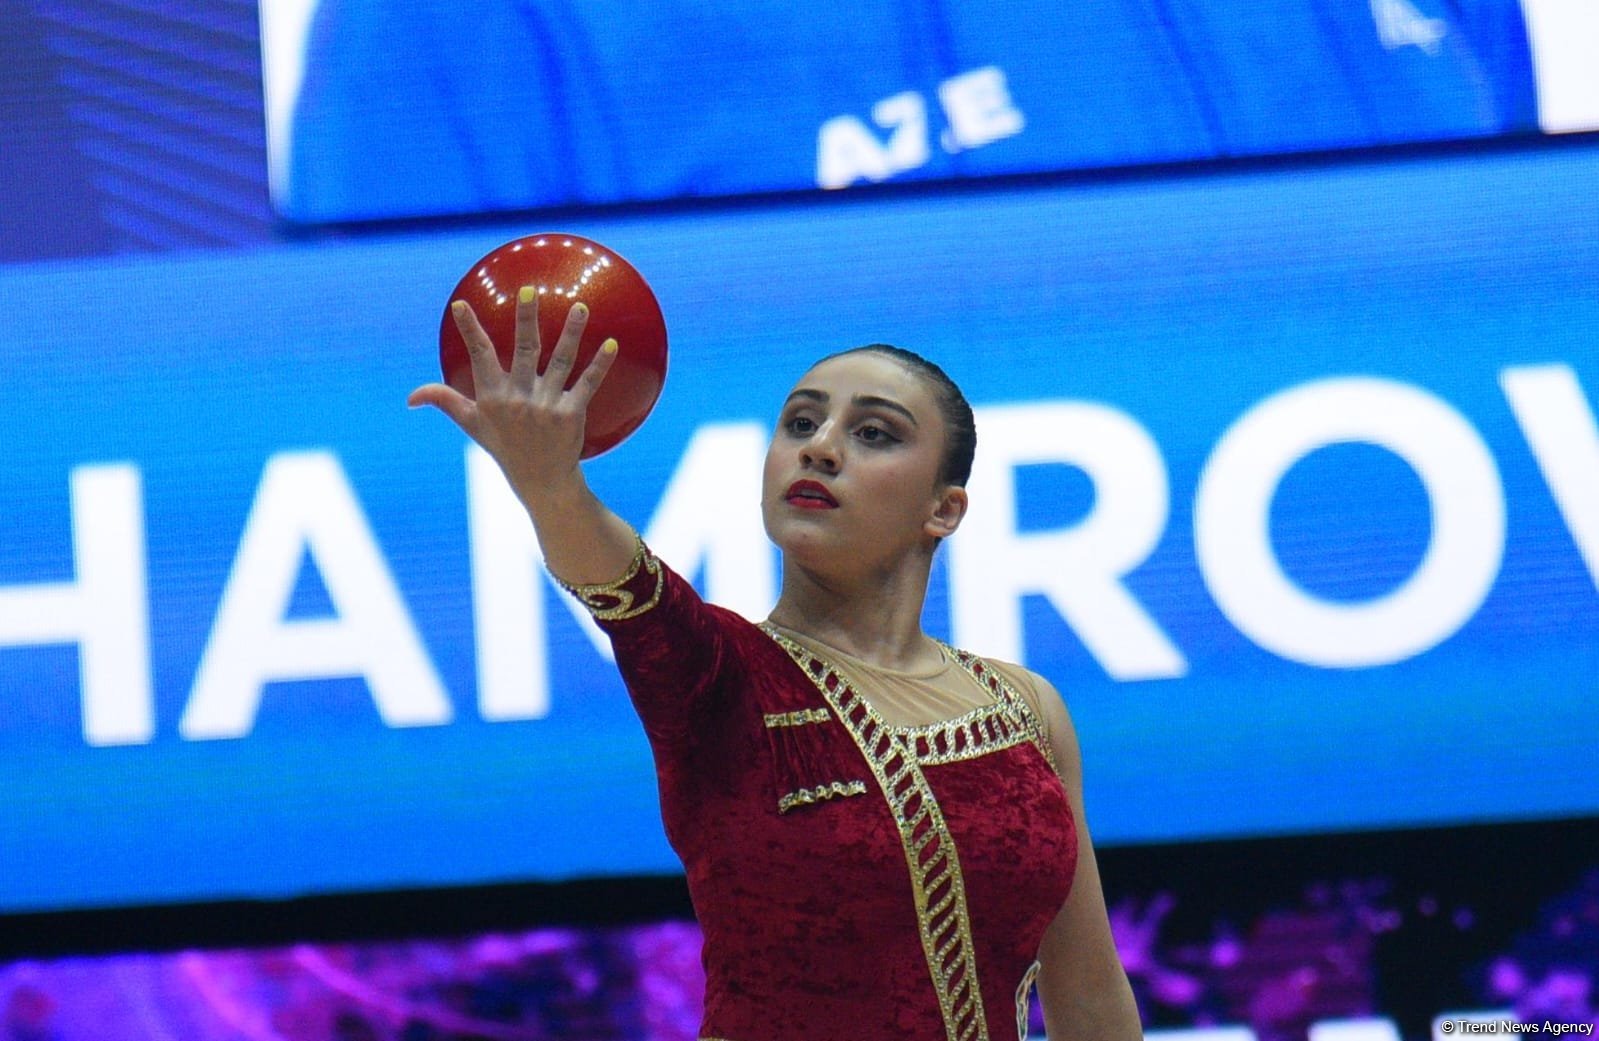 Azerbaijani athletes compete in finals of European Cup in Rhythmic Gymnastics in Baku (PHOTO)